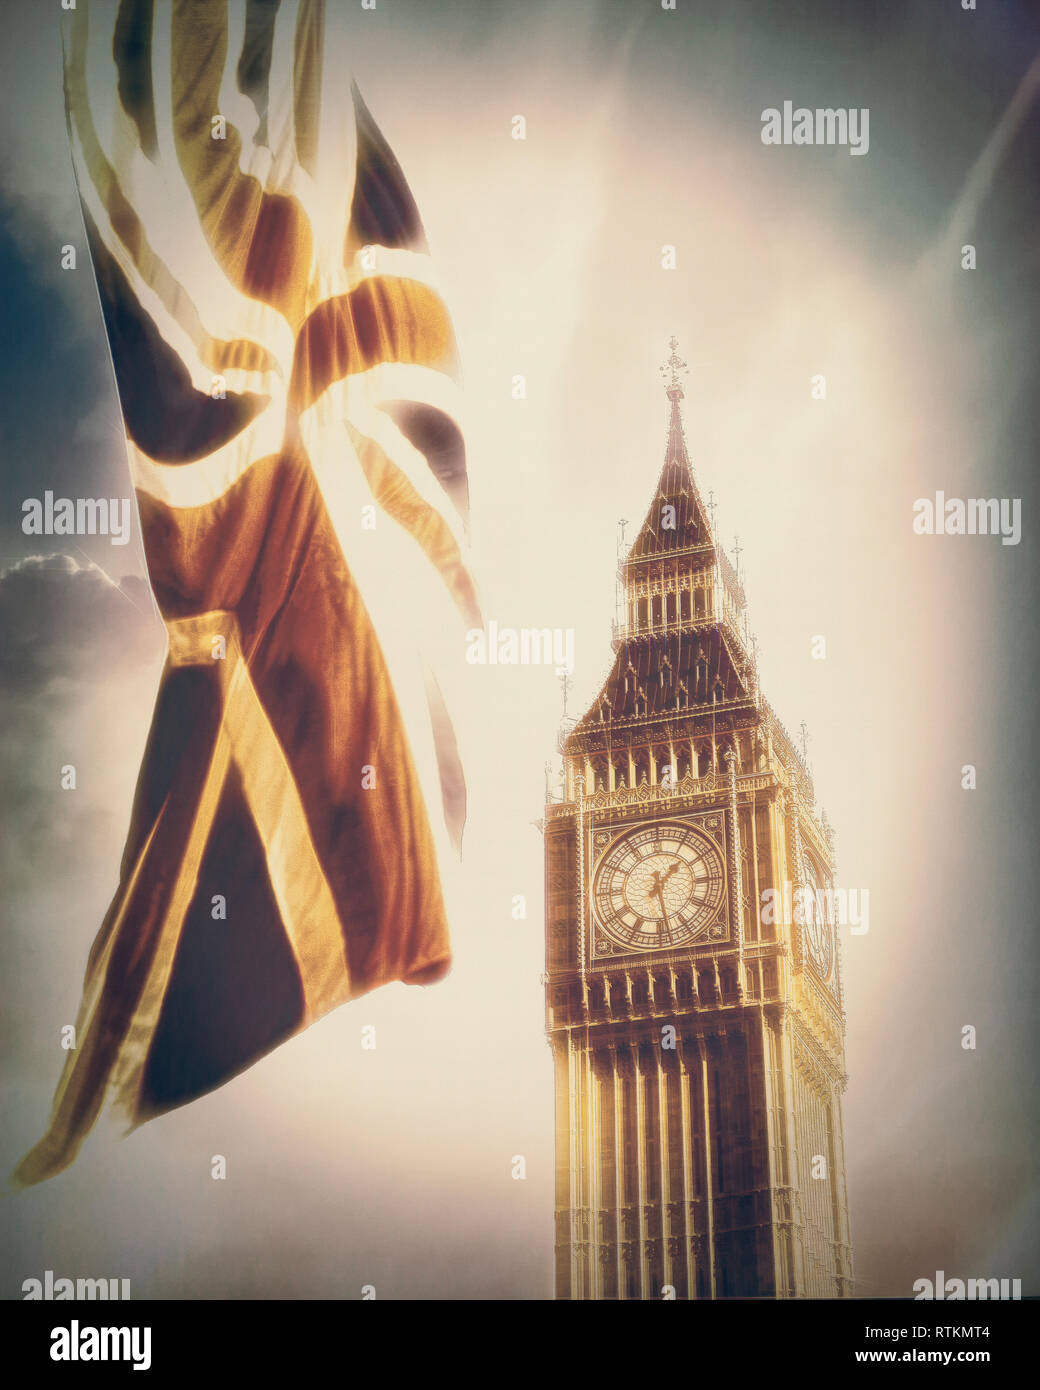 Arte: Londra (Big Ben & Union Jack flag) Foto Stock